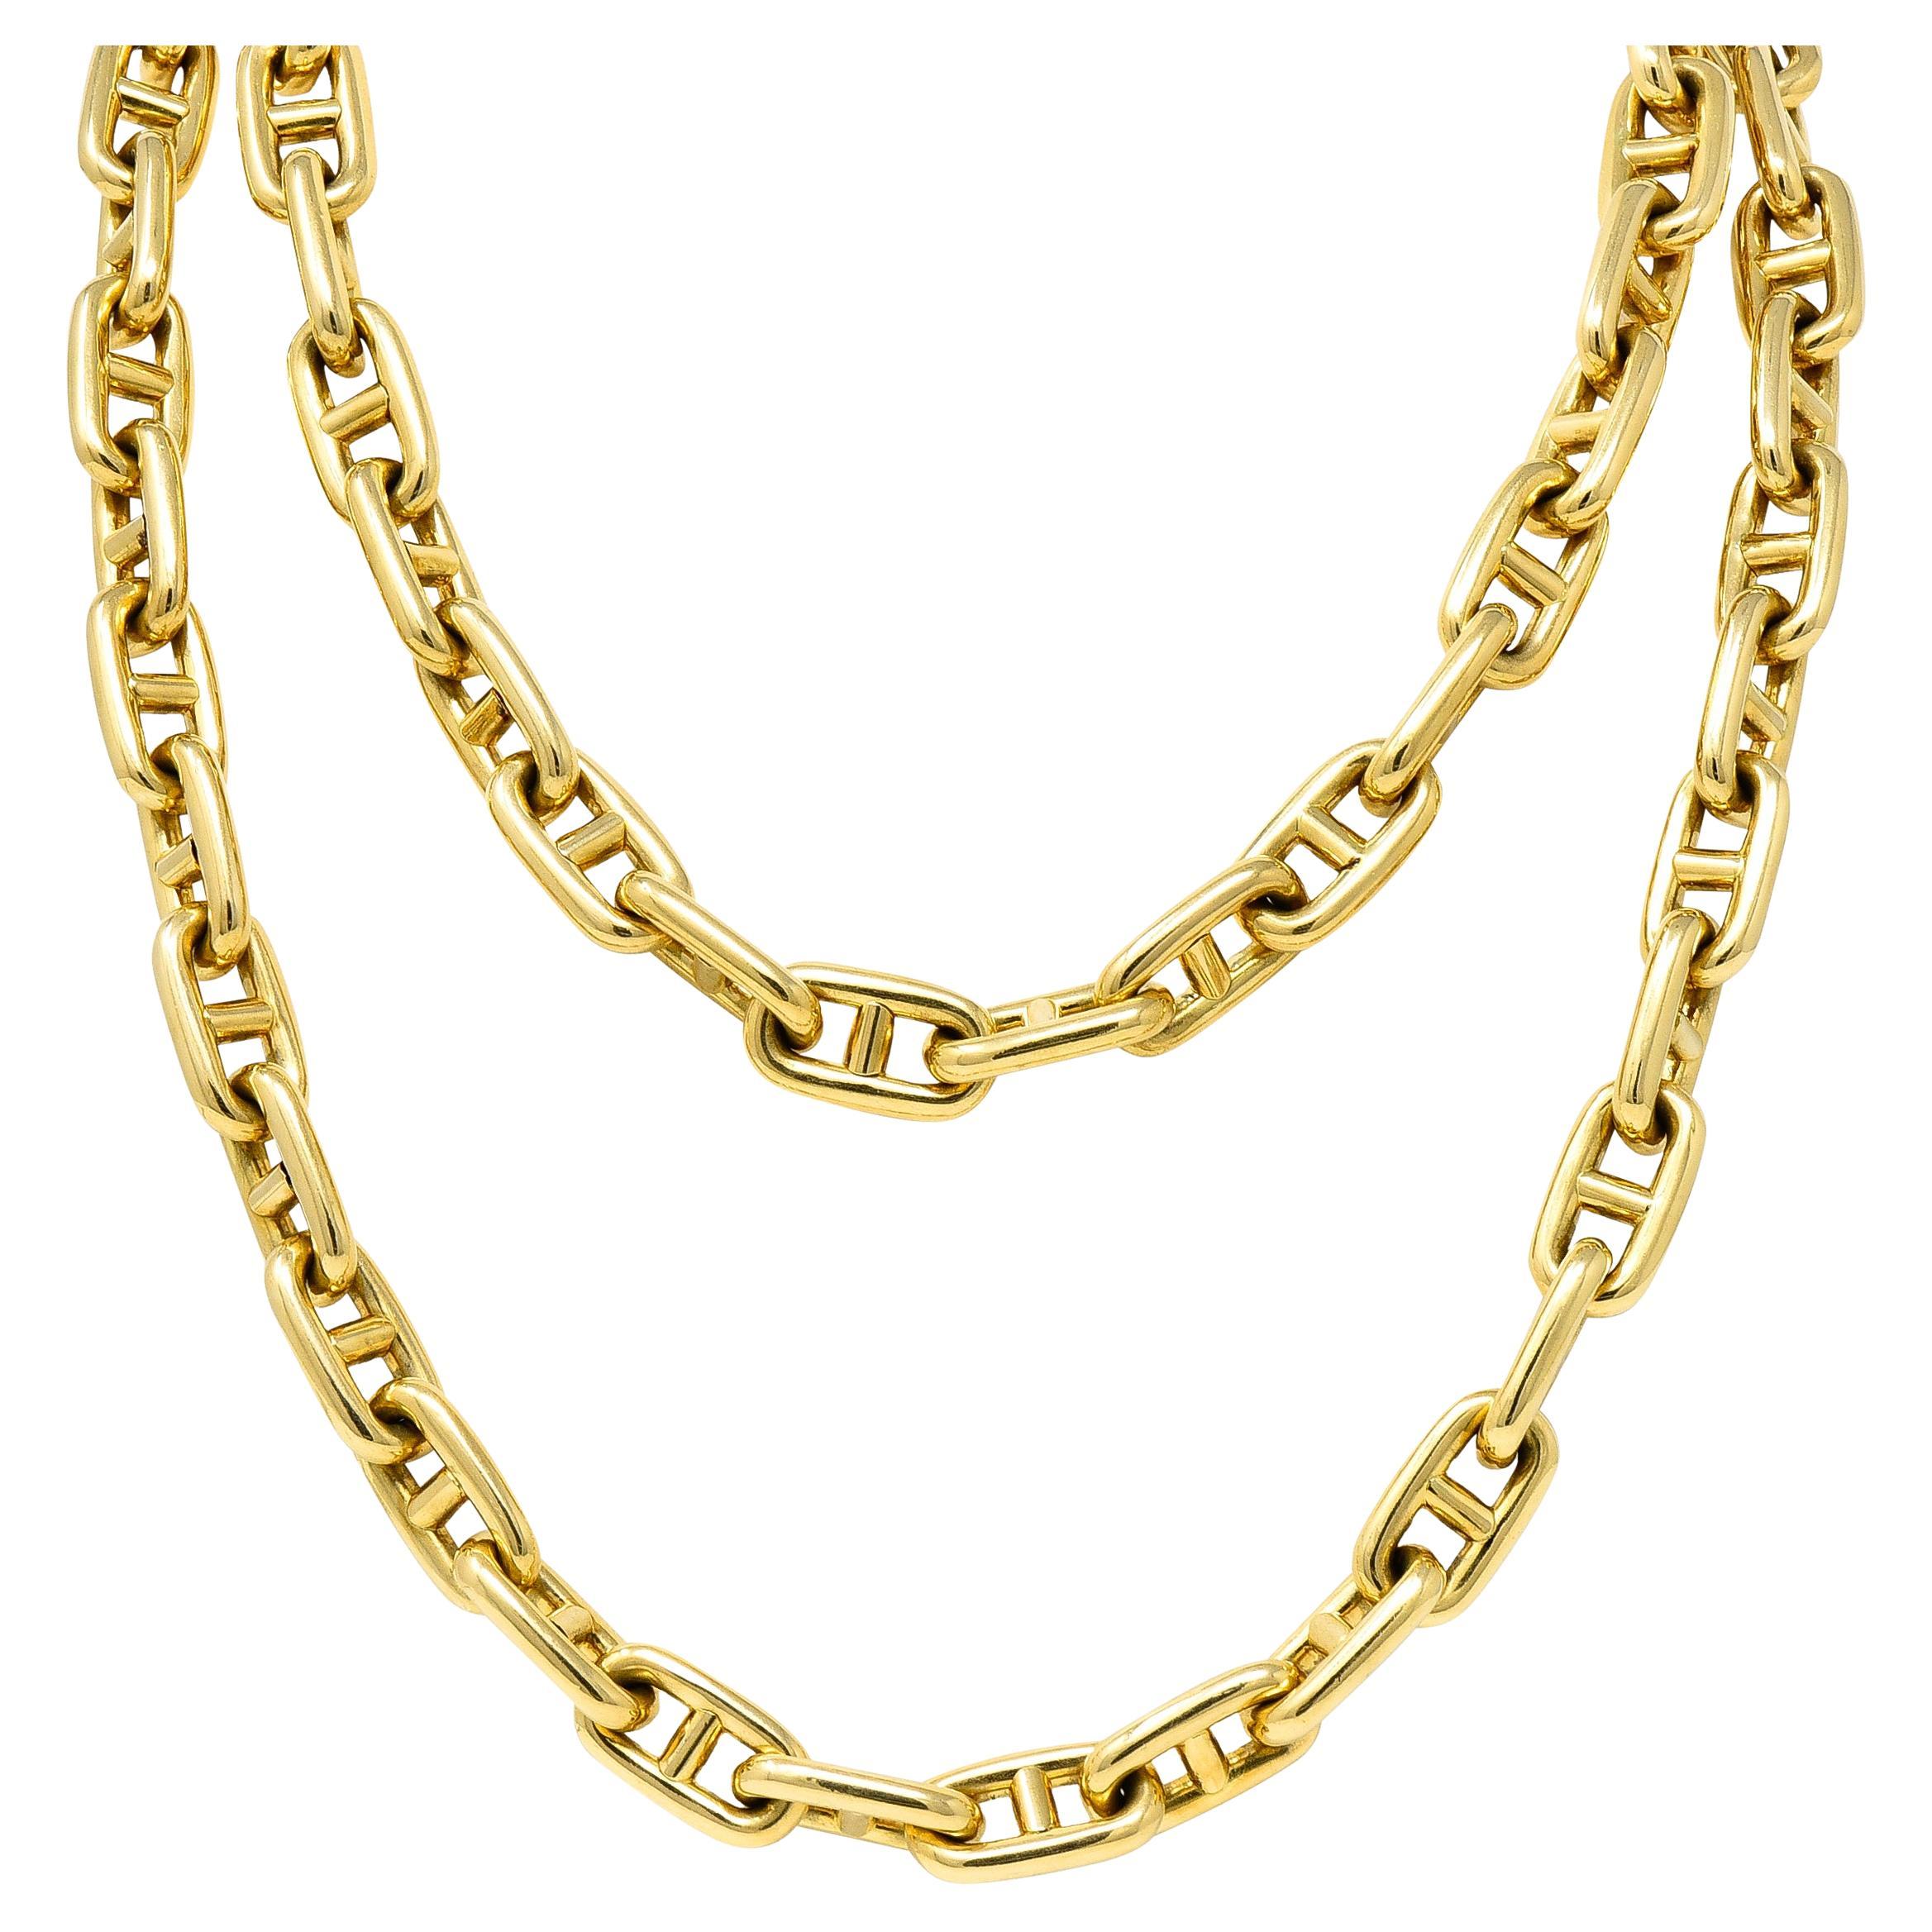 Substantial Vintage Bulgari 18 Karat Yellow Gold Mariner Link Chain Necklace